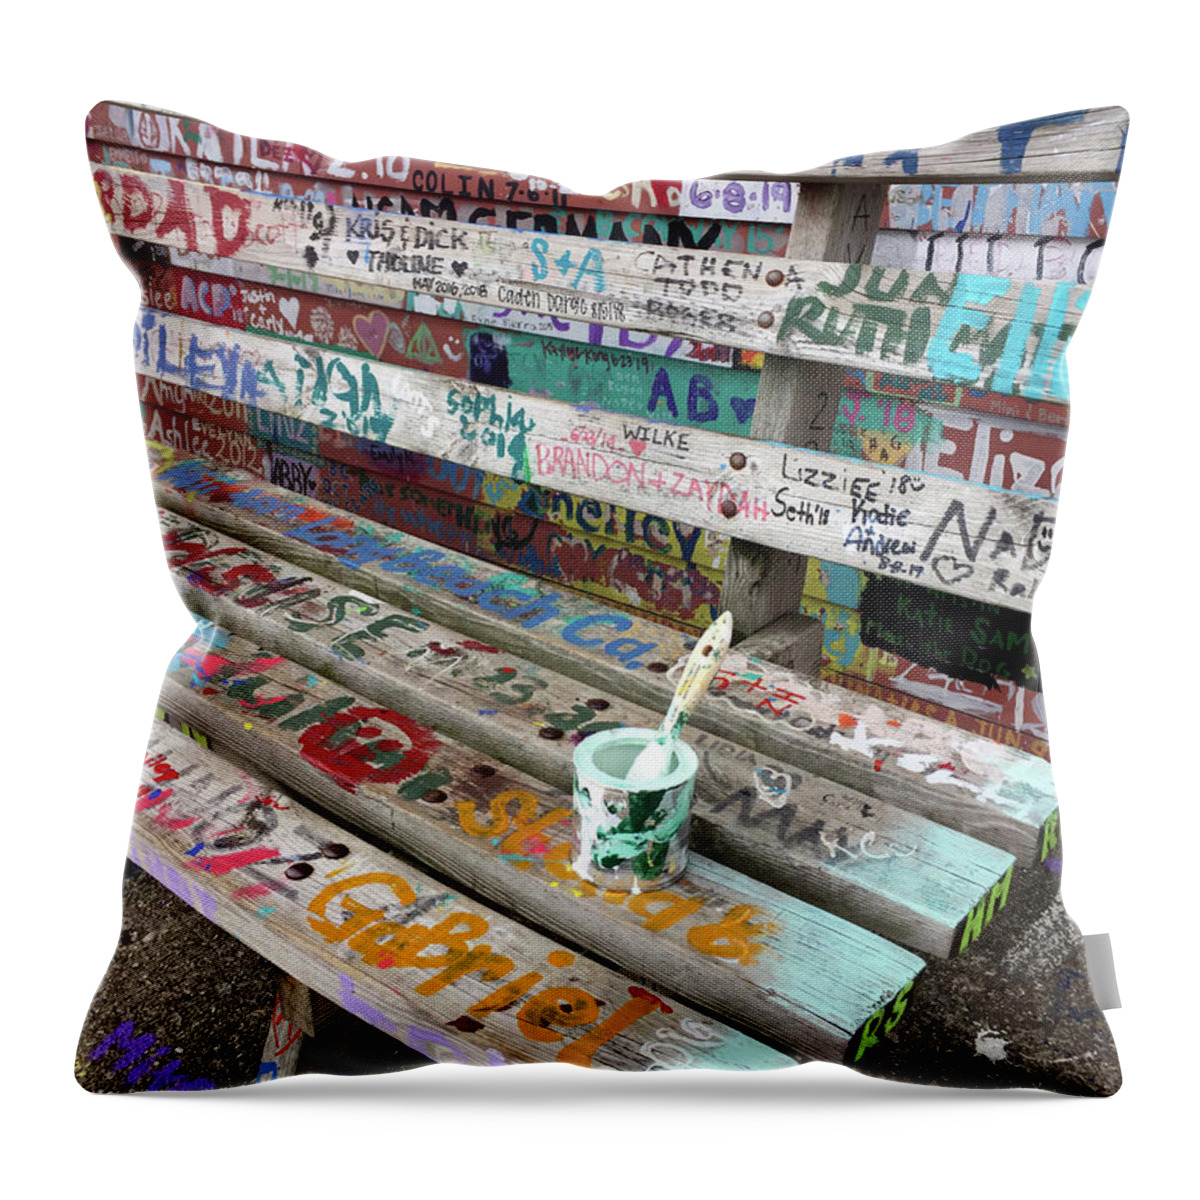 Graffiti Throw Pillow featuring the photograph Graffiti Encouraged by David T Wilkinson